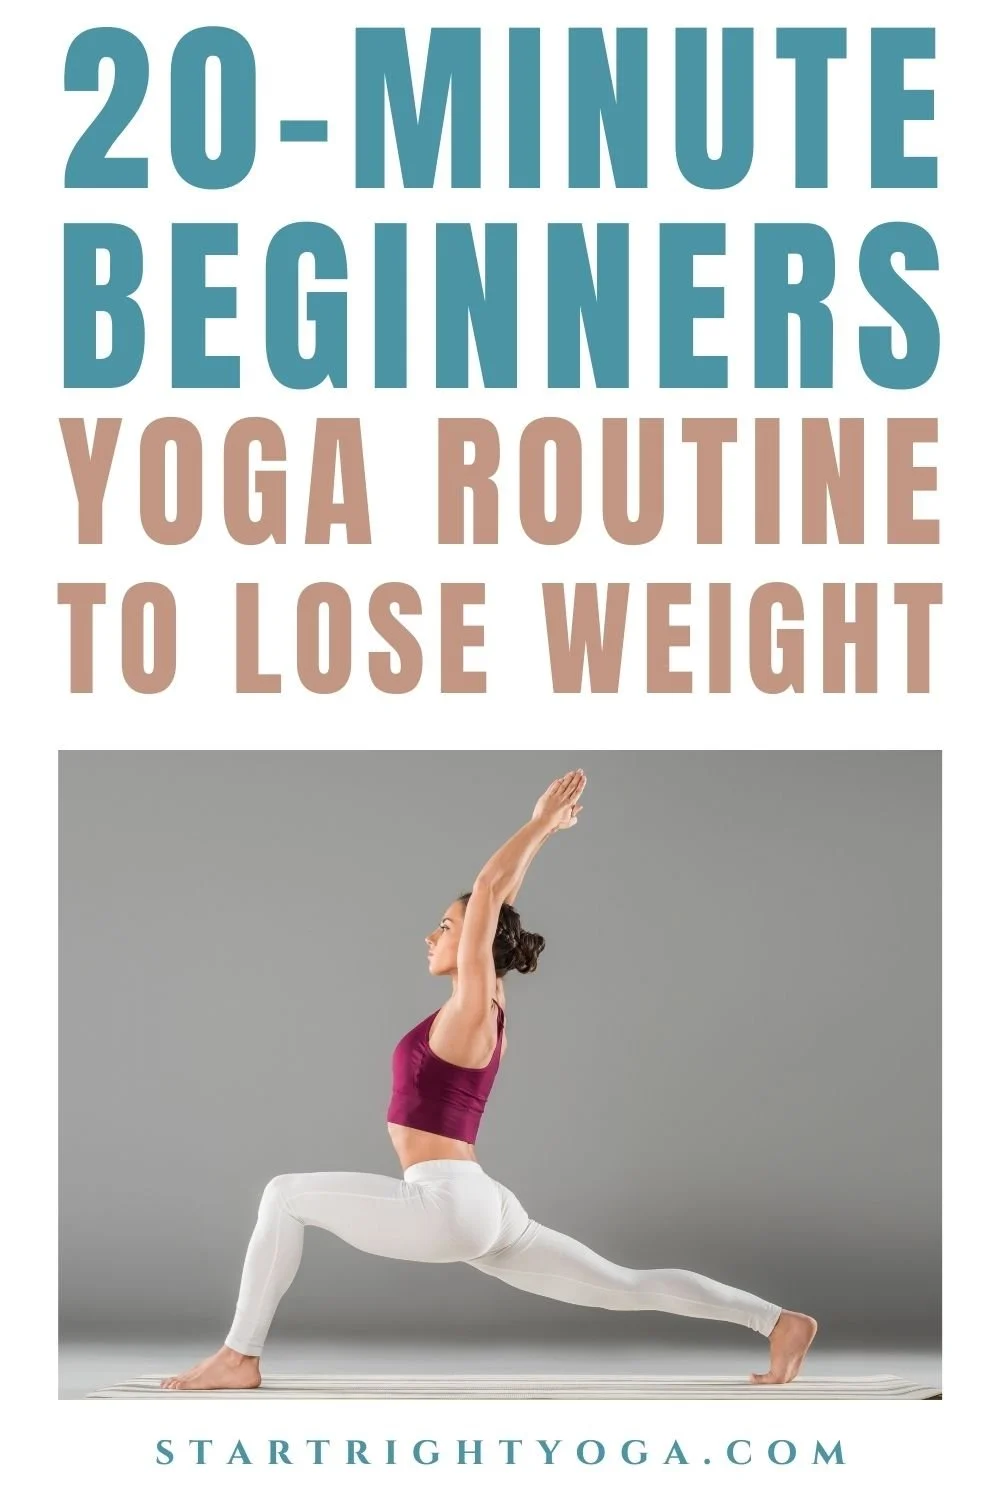 11 Essential Yoga Poses For Beginners | Wellness | MyFitnessPal